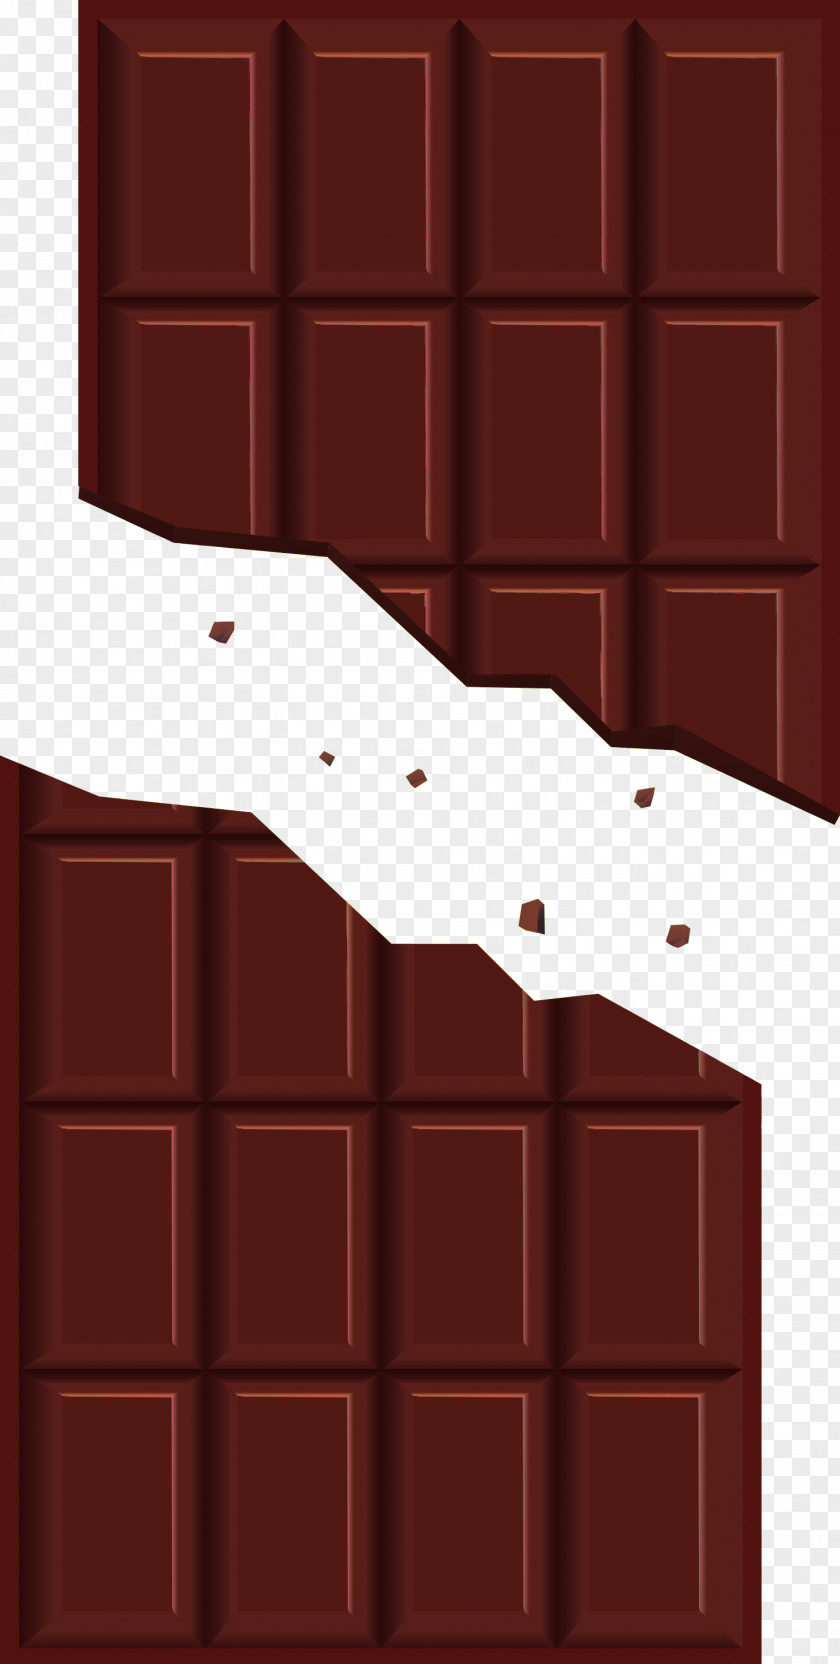 Dark Chocolate Bar Opened PNG